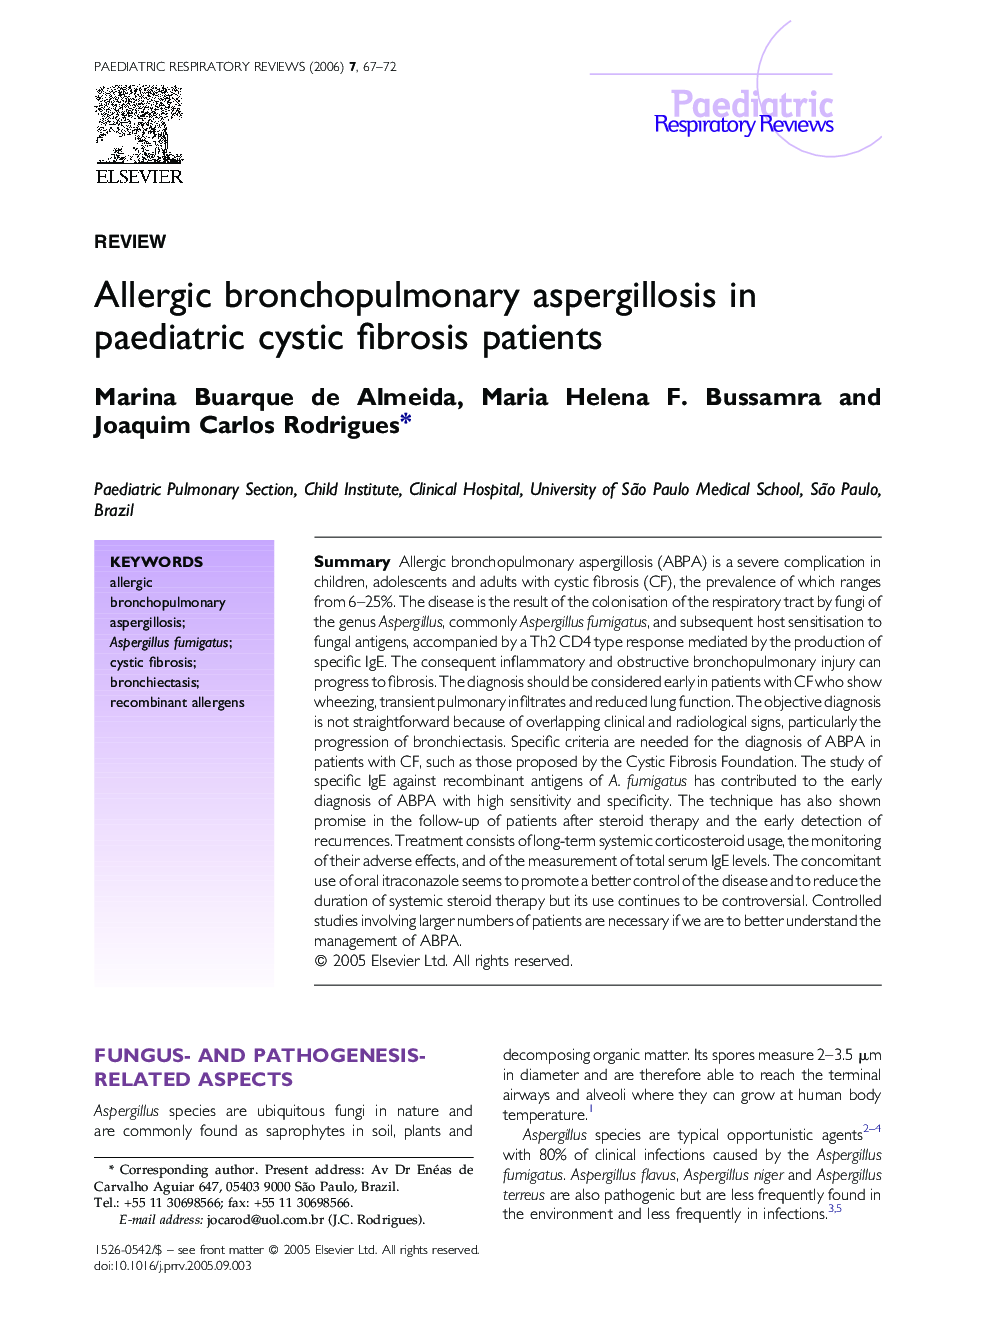 Allergic bronchopulmonary aspergillosis in paediatric cystic fibrosis patients